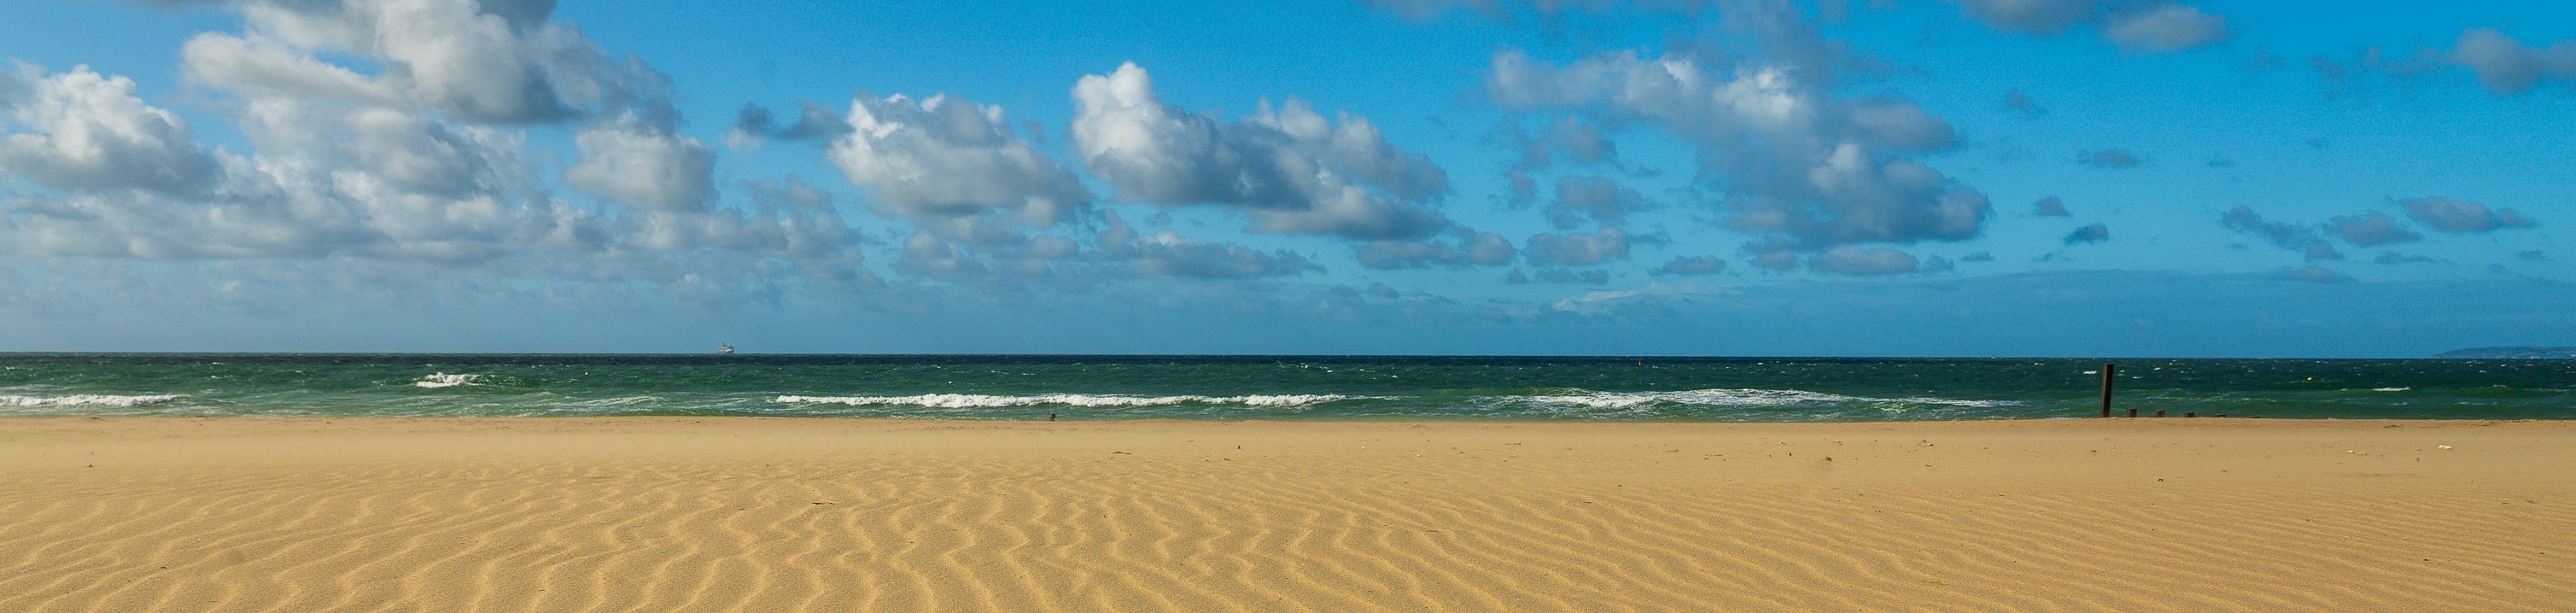 Beach scene image